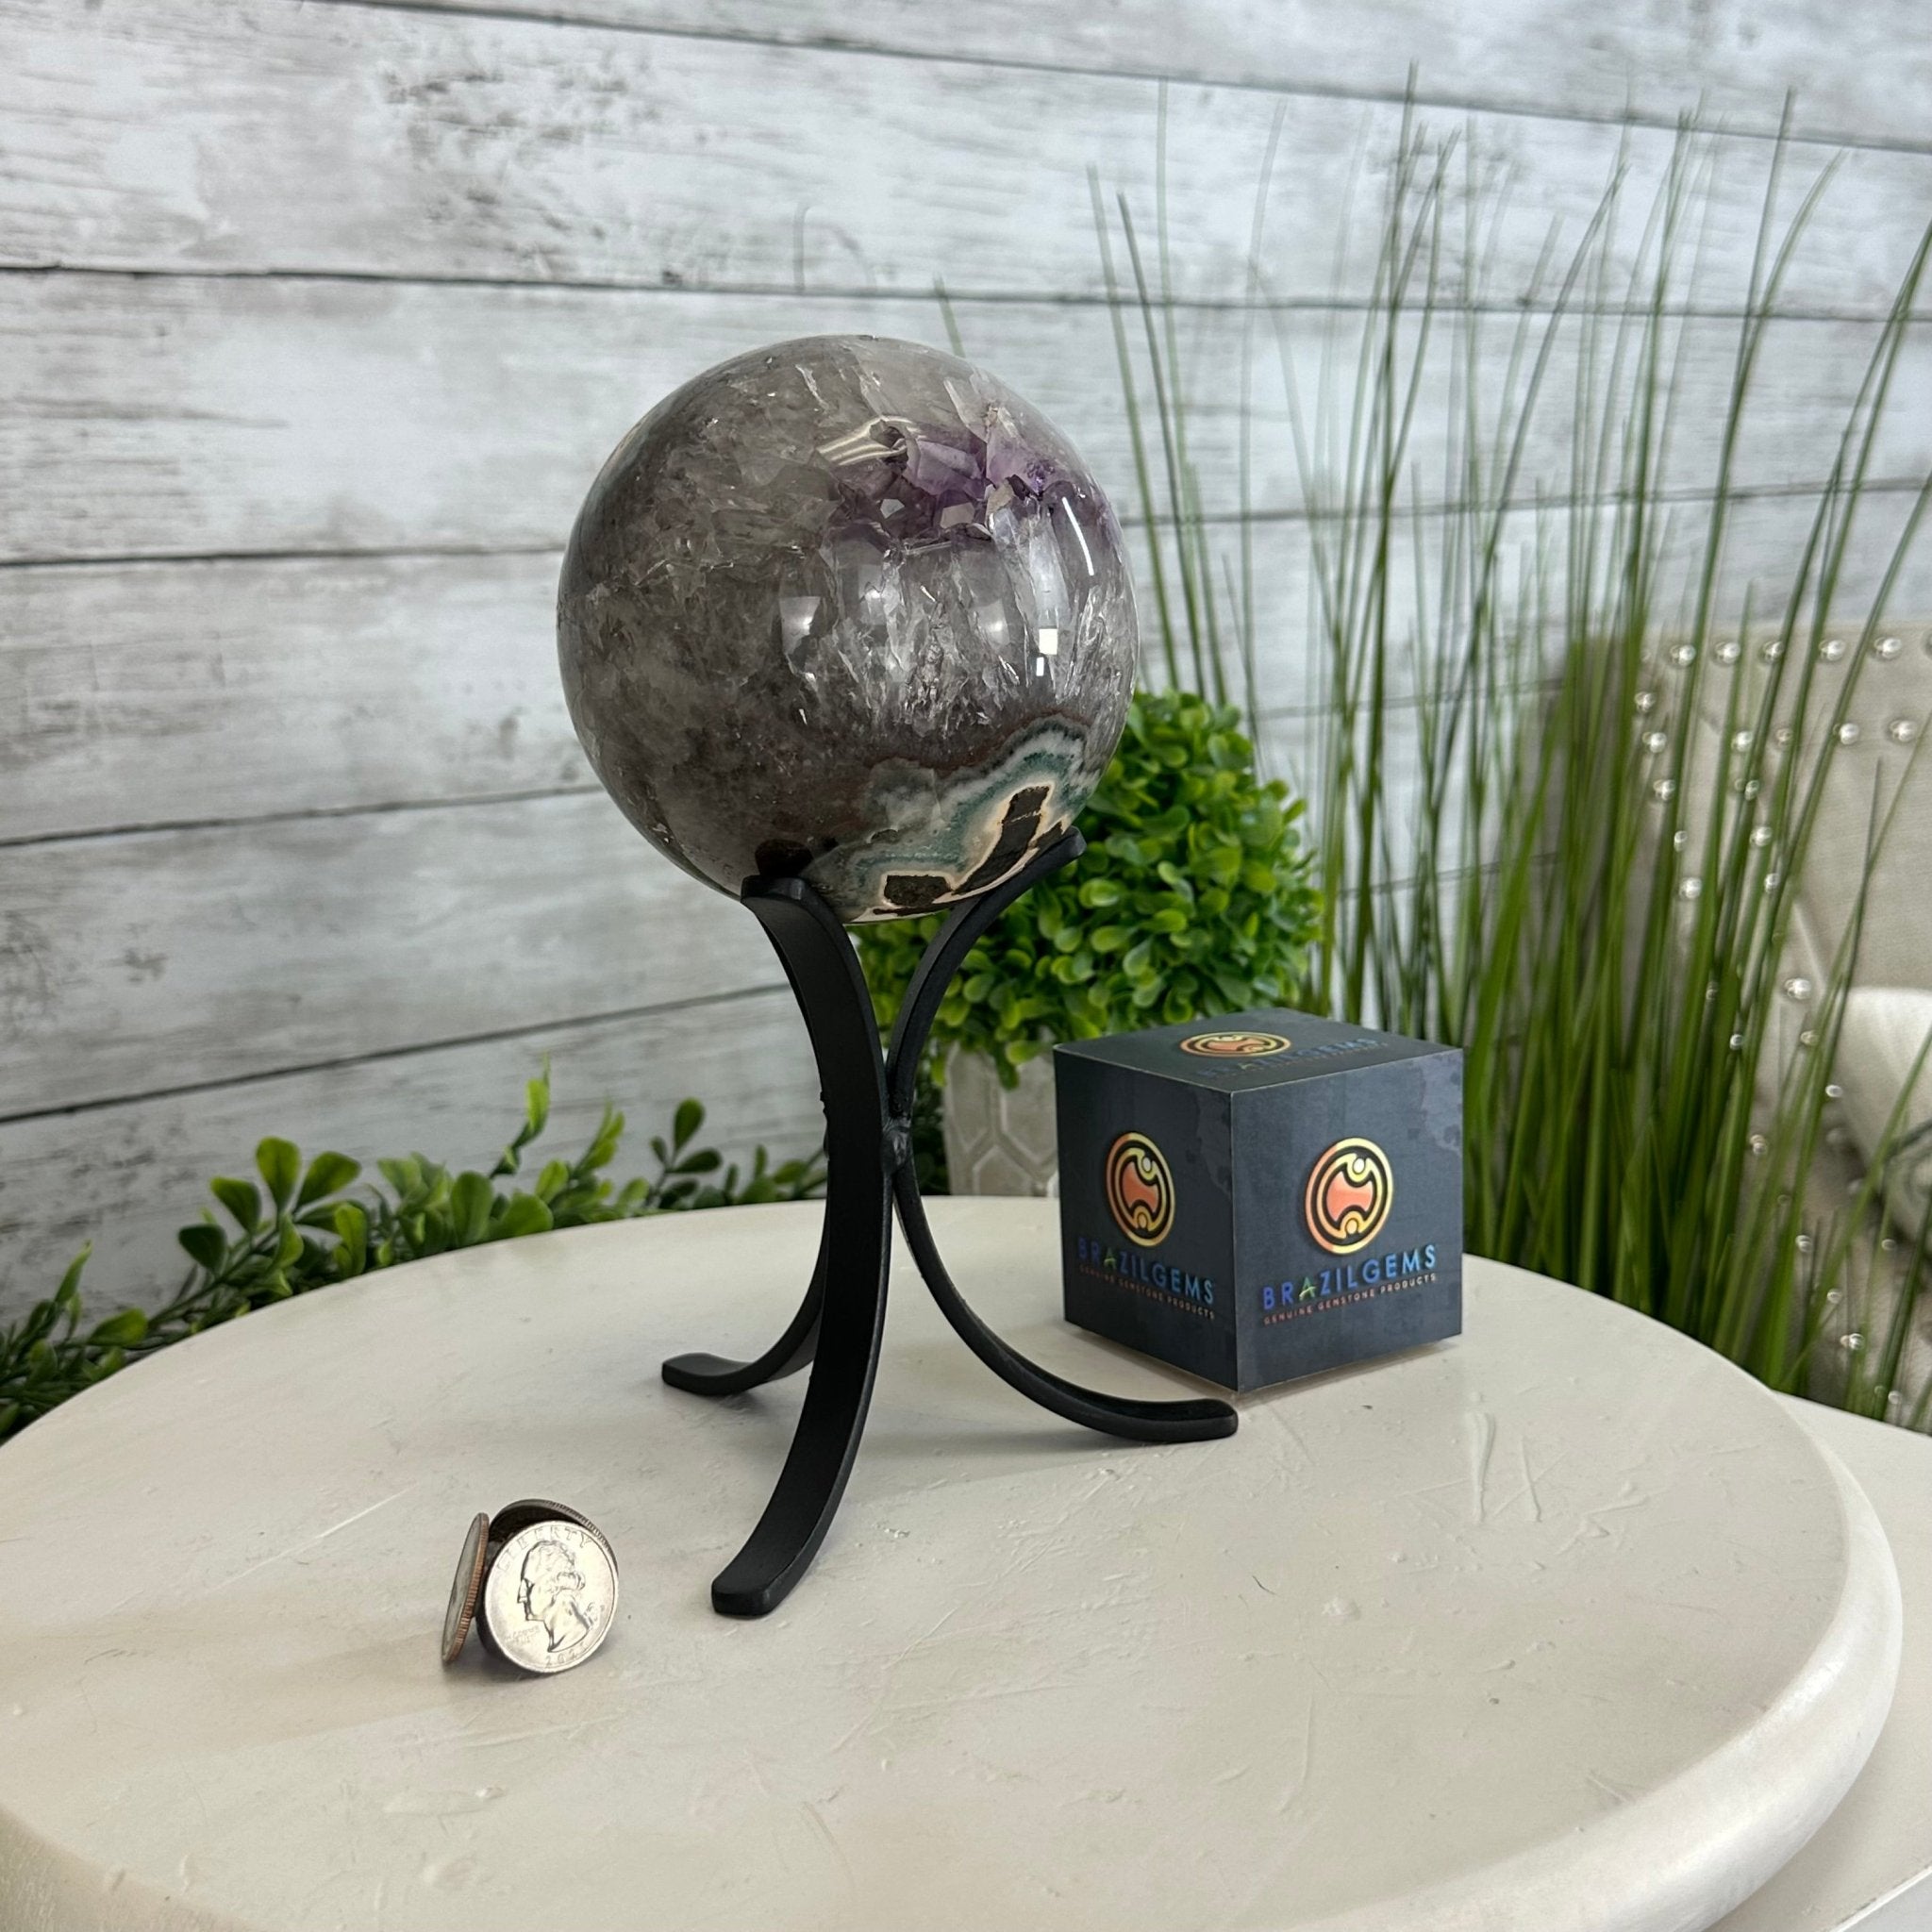 Druzy Amethyst Sphere on a Metal Stand, 3.8 lbs & 8.7" Tall #5630-0058 - Brazil GemsBrazil GemsDruzy Amethyst Sphere on a Metal Stand, 3.8 lbs & 8.7" Tall #5630-0058Spheres5630-0058